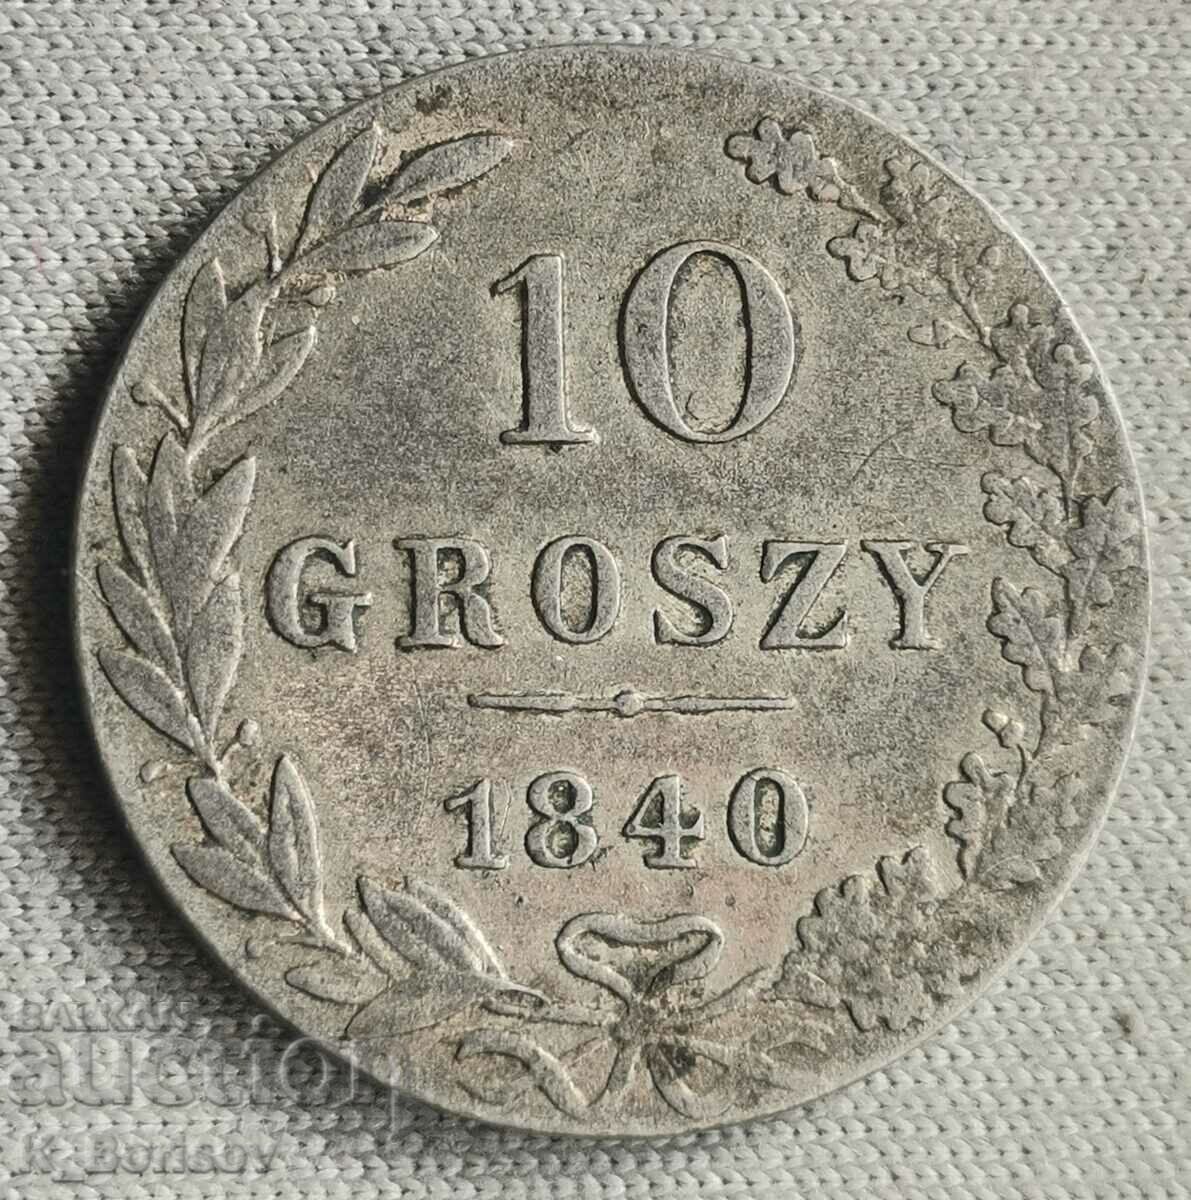 Russian share of Poland 10 groshy 1840